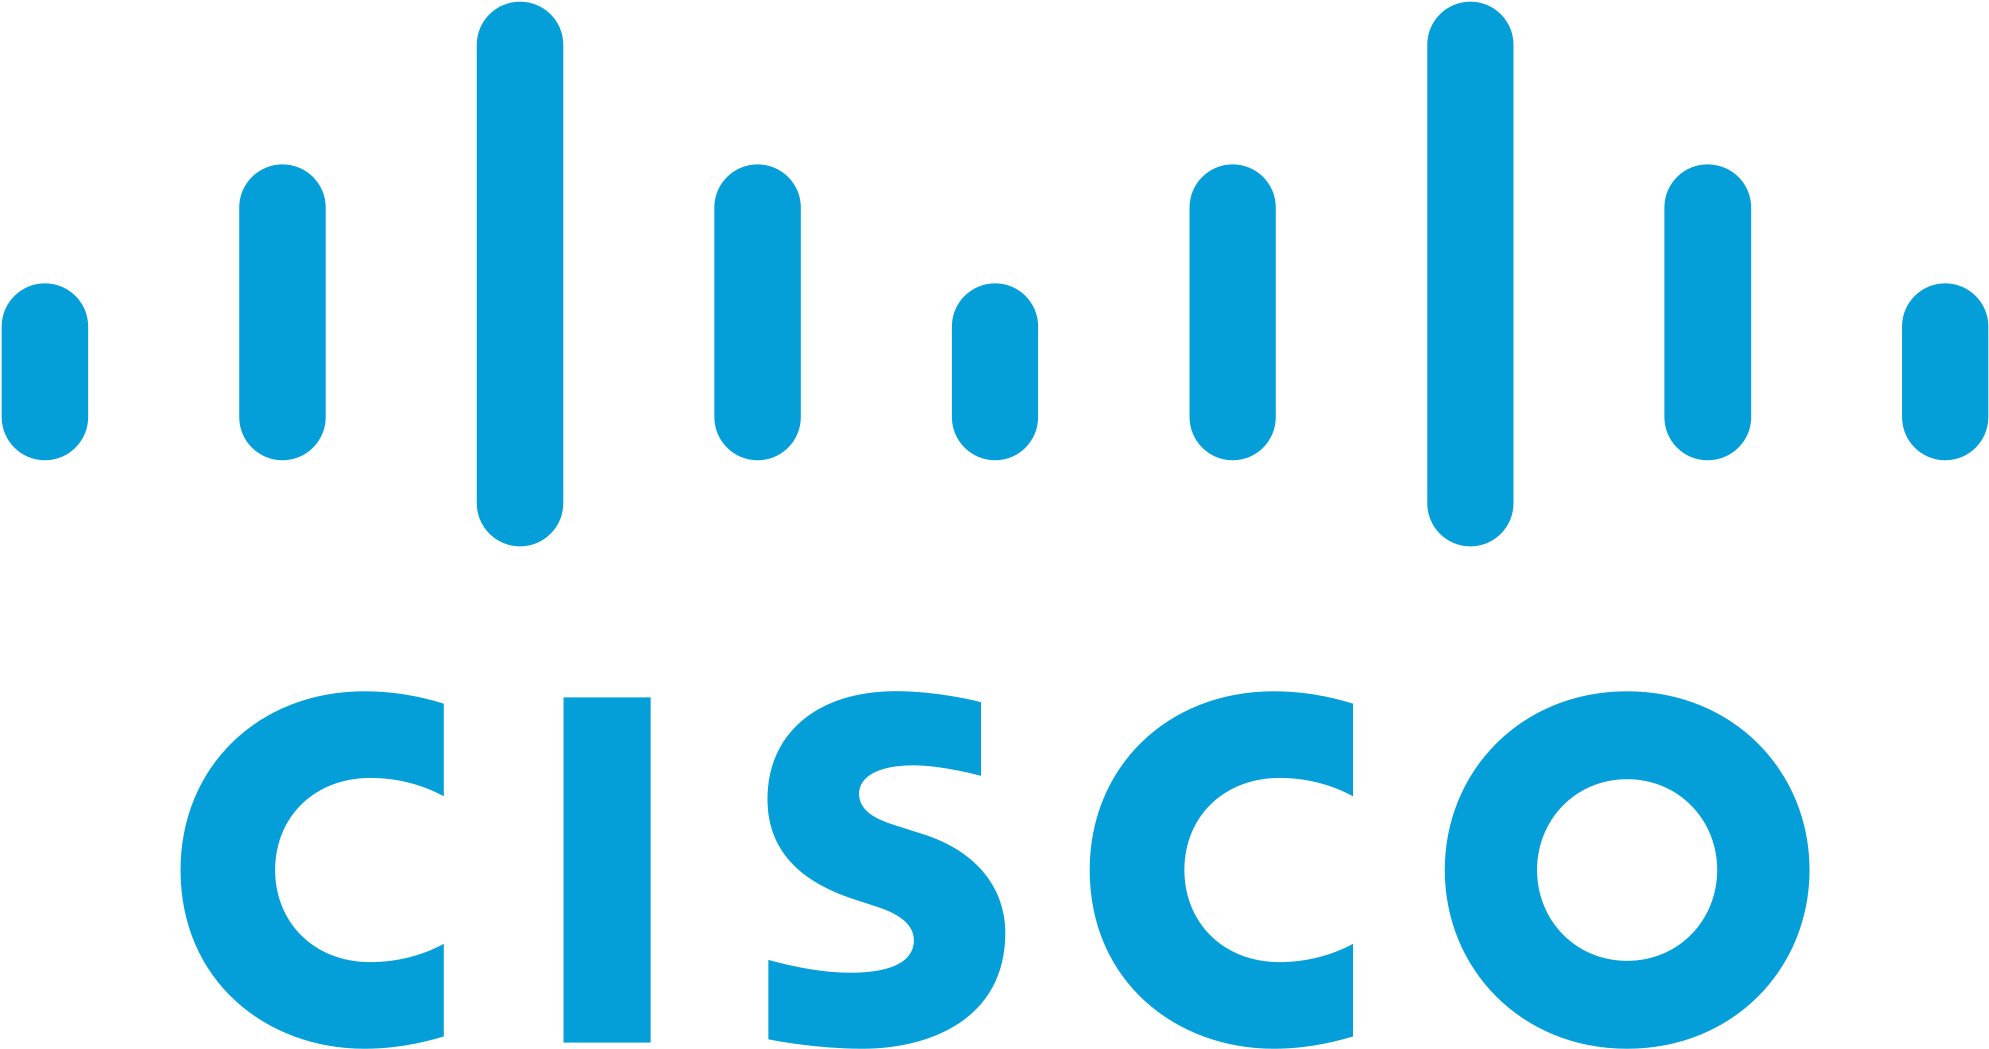 Cisco Logo Svg - Cisco Systems Inc Logo Clipart (2000x1060), Png Download